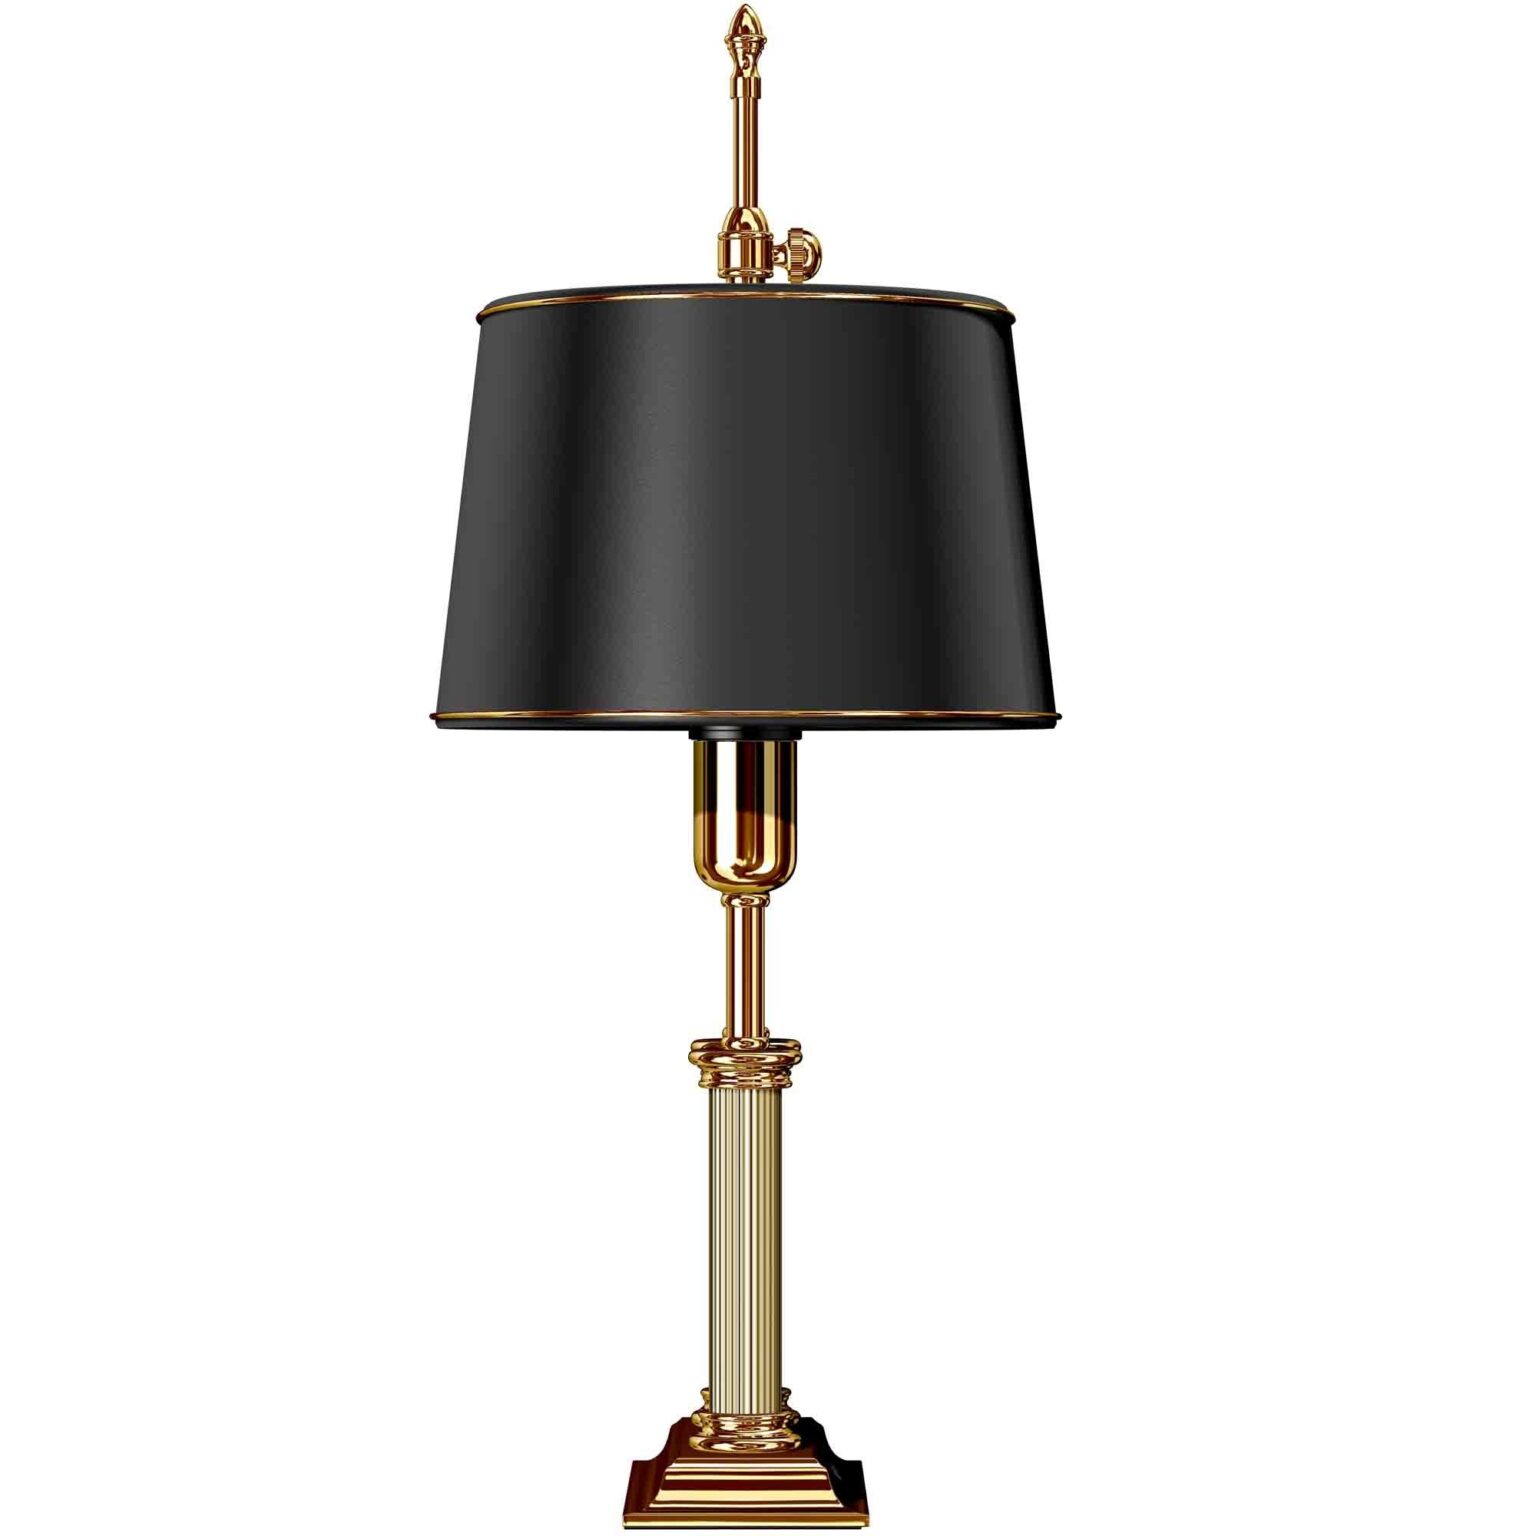 24k Gold Desk Lamp -Luxury Corporate Gifts Leronza